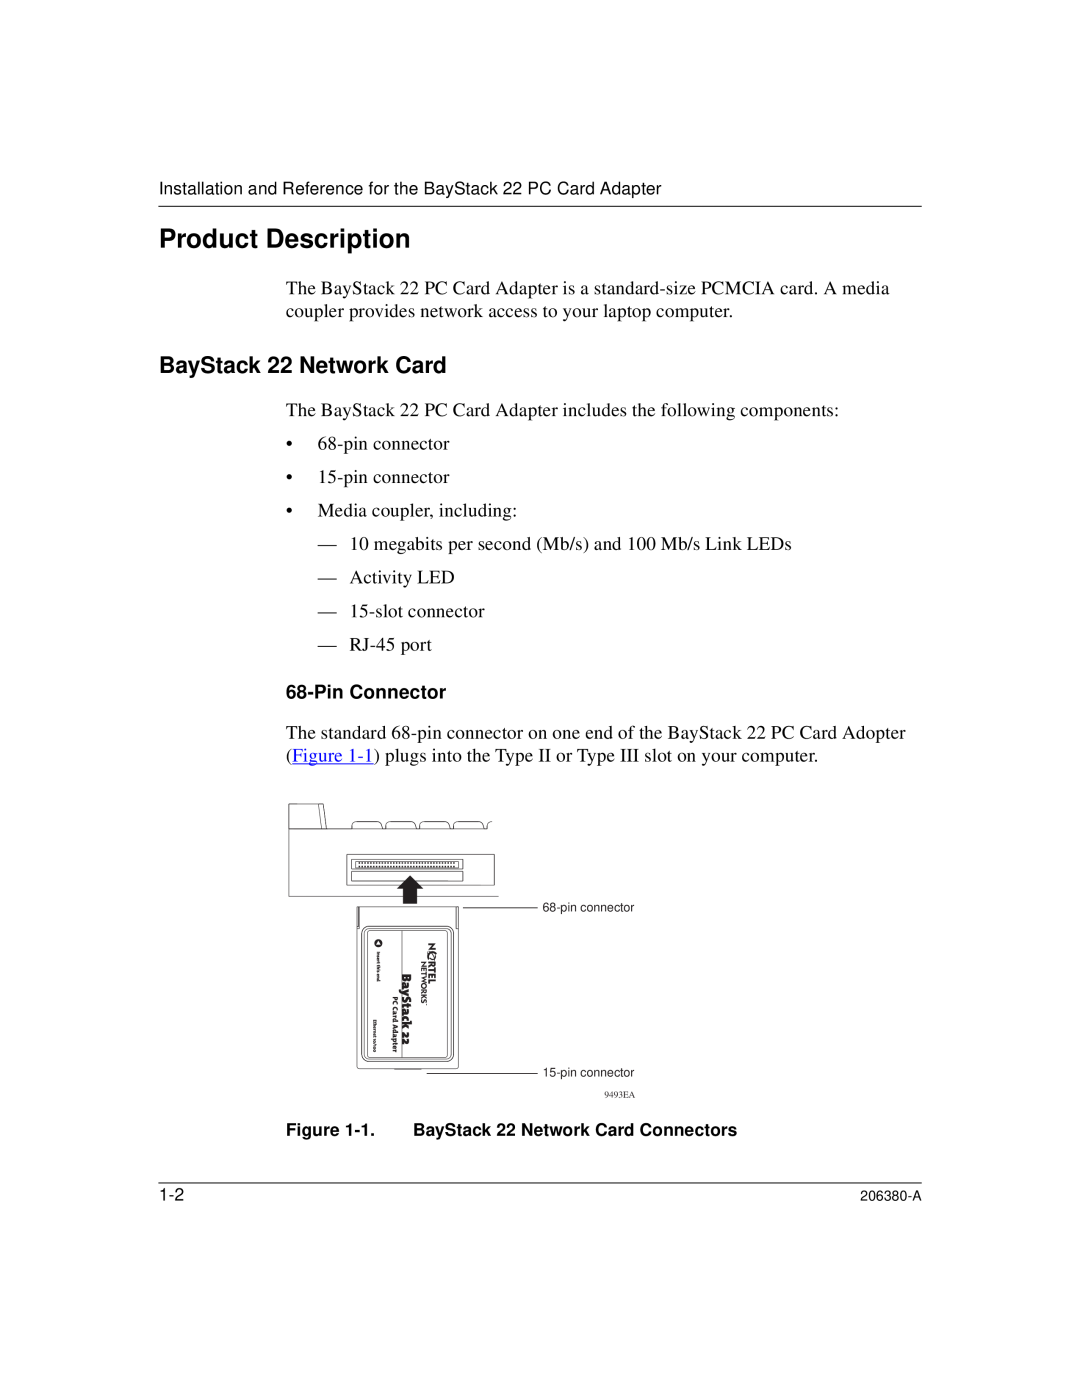 3Com 206380-A manual Product Description, BayStack 22 Network Card, PinConnector 